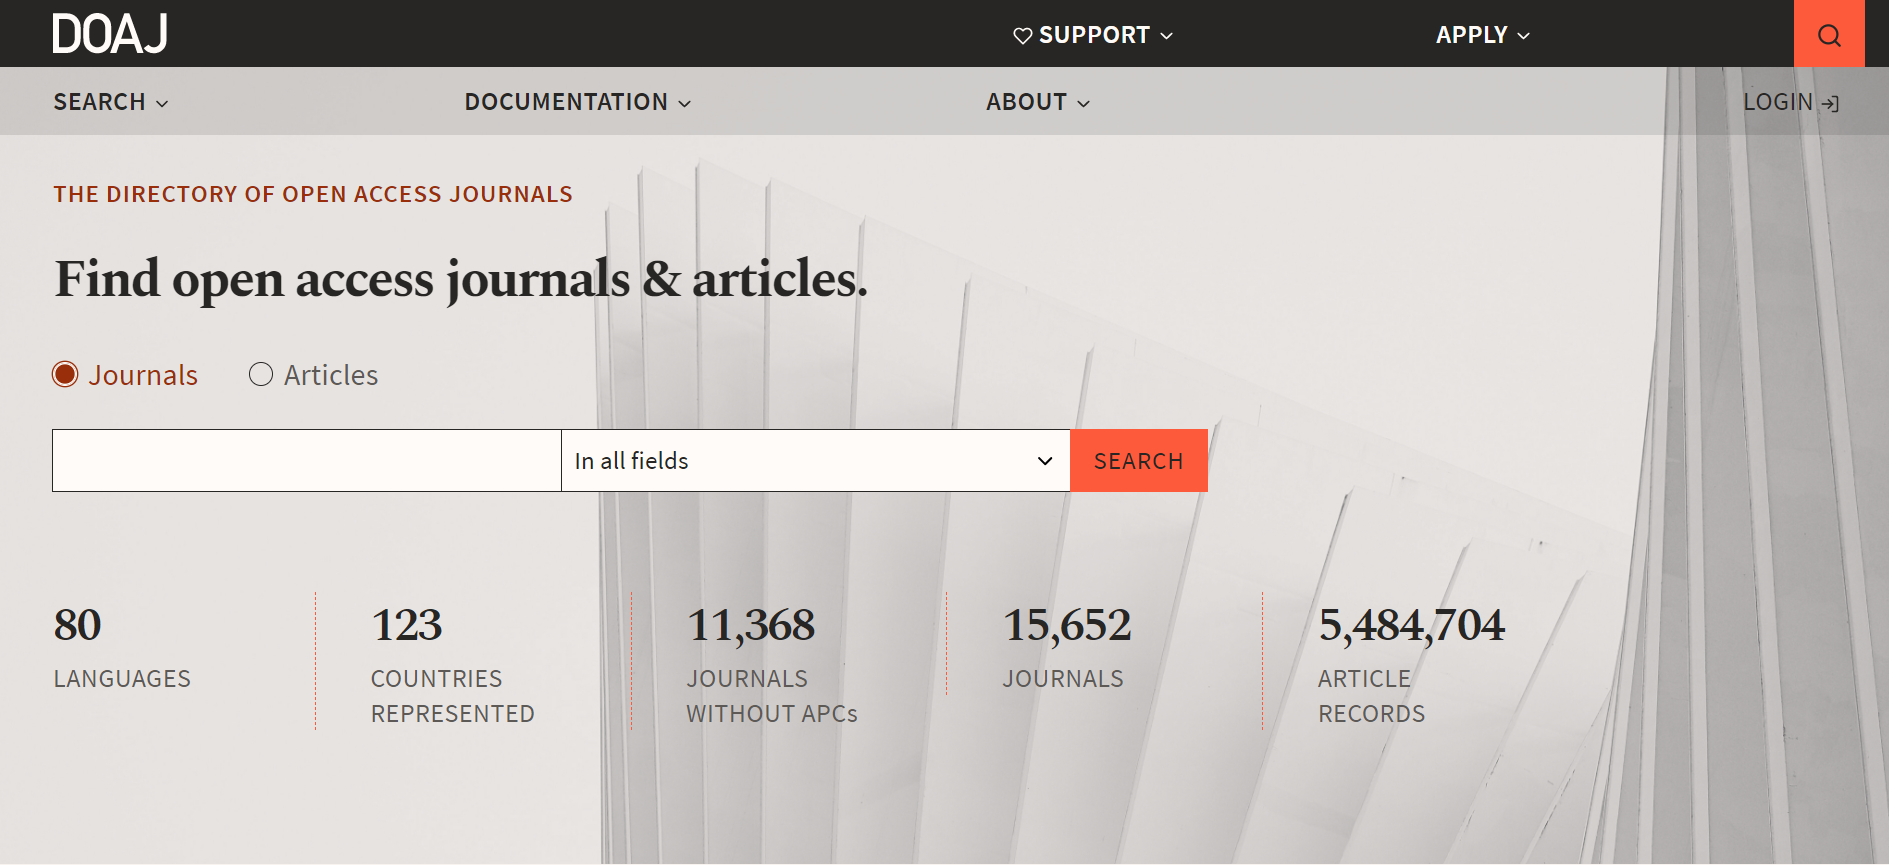 DOAJ open access journals homepage